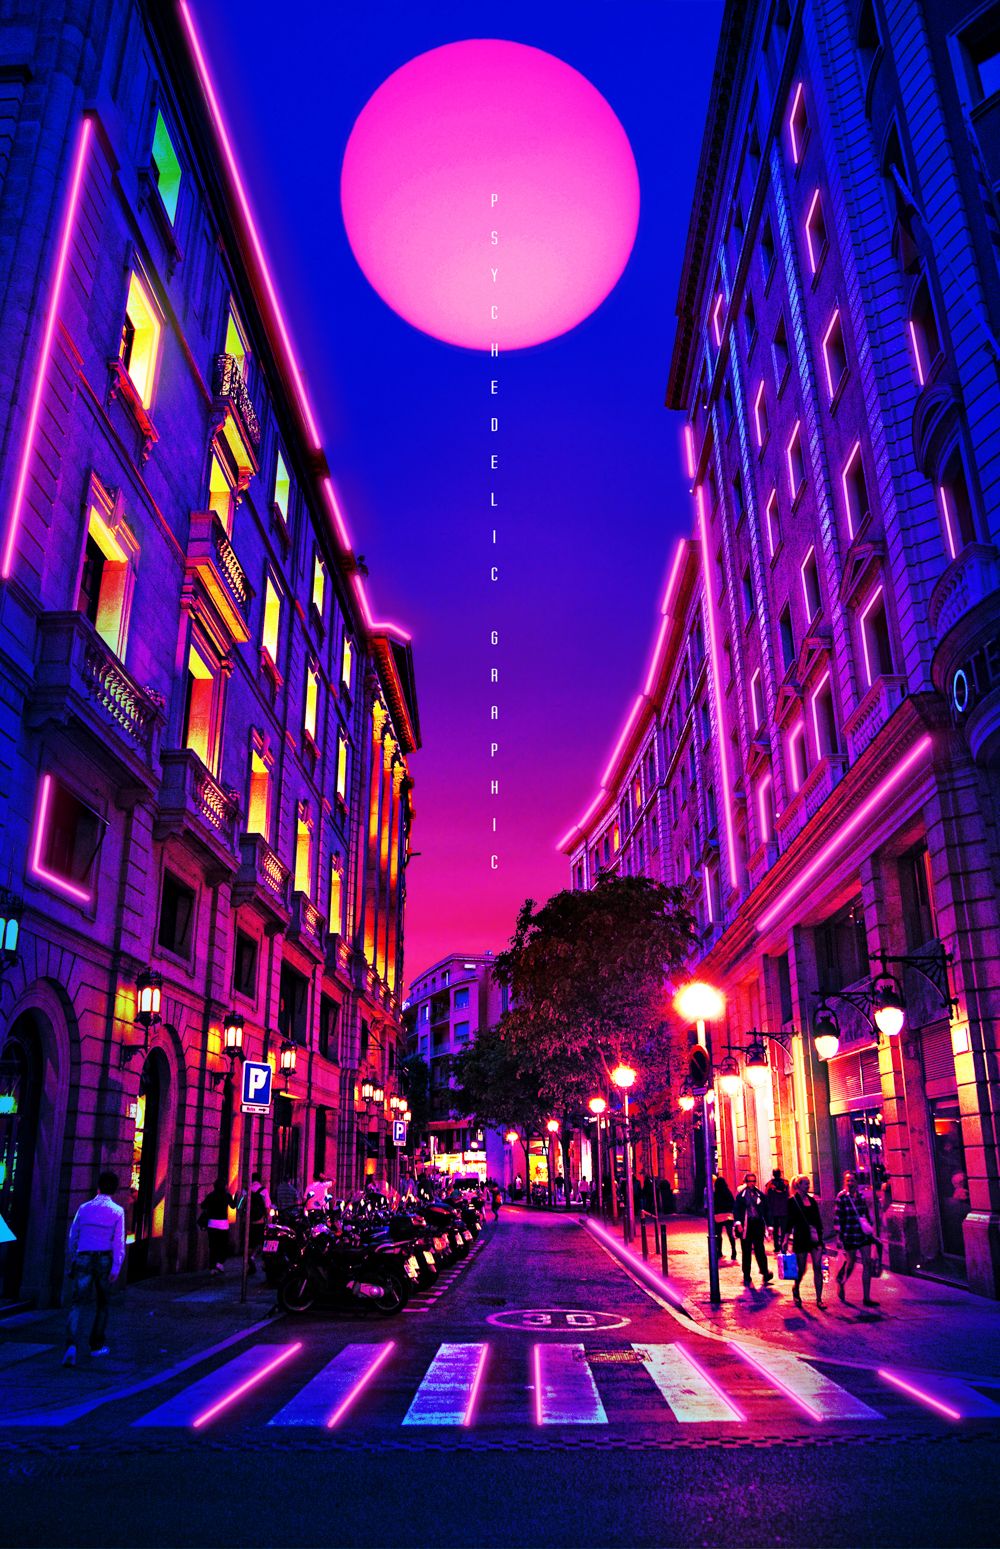 Neon City.jpg